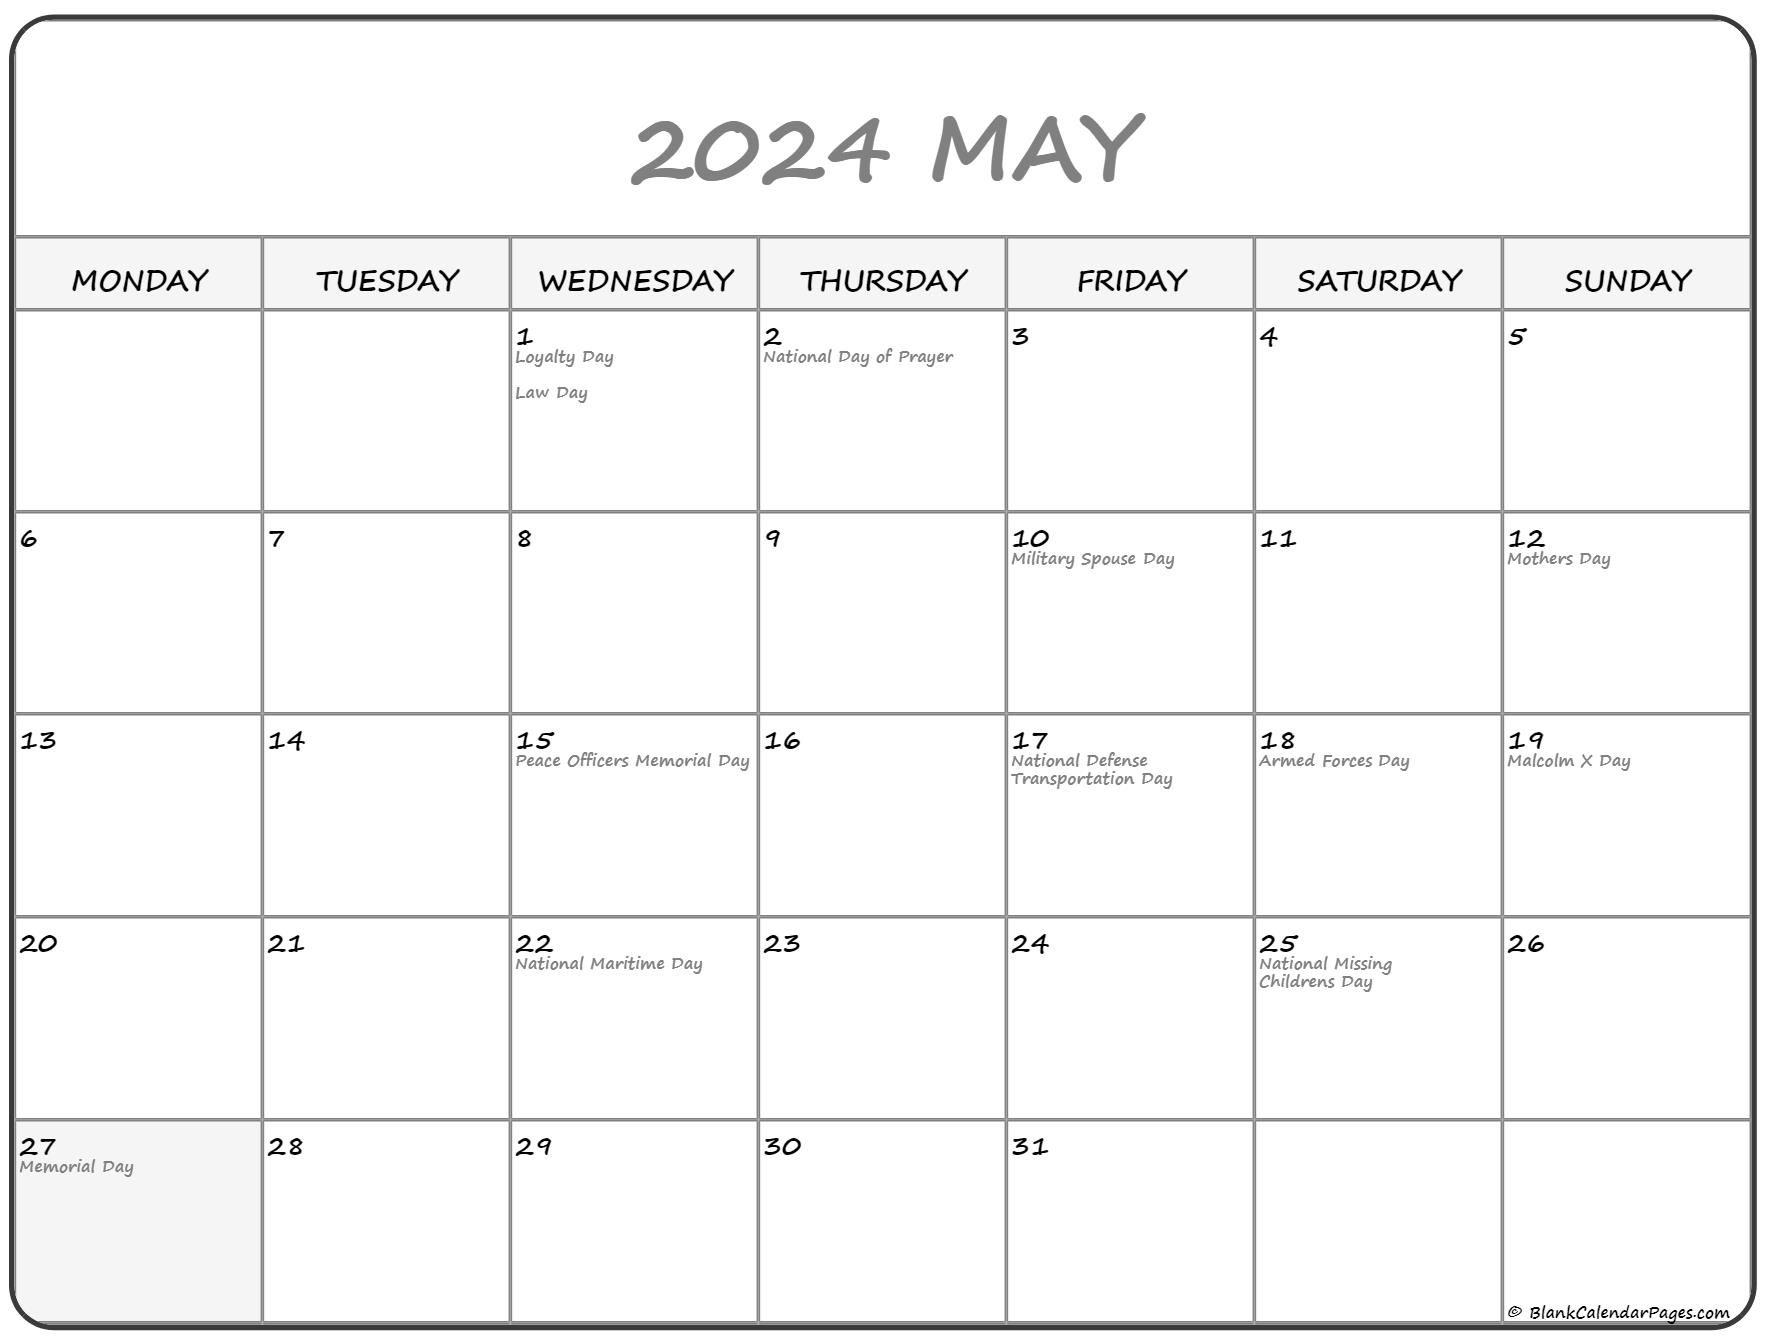 may-2023-monday-calendar-monday-to-sunday